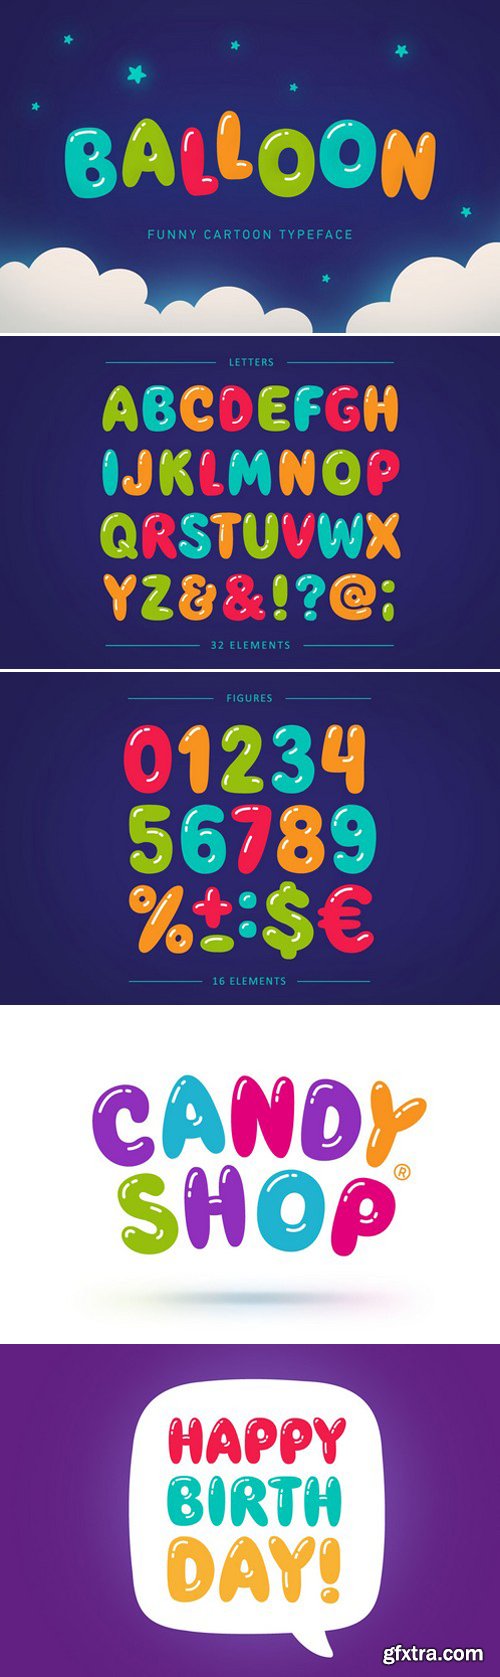 CM - Balloon typeface